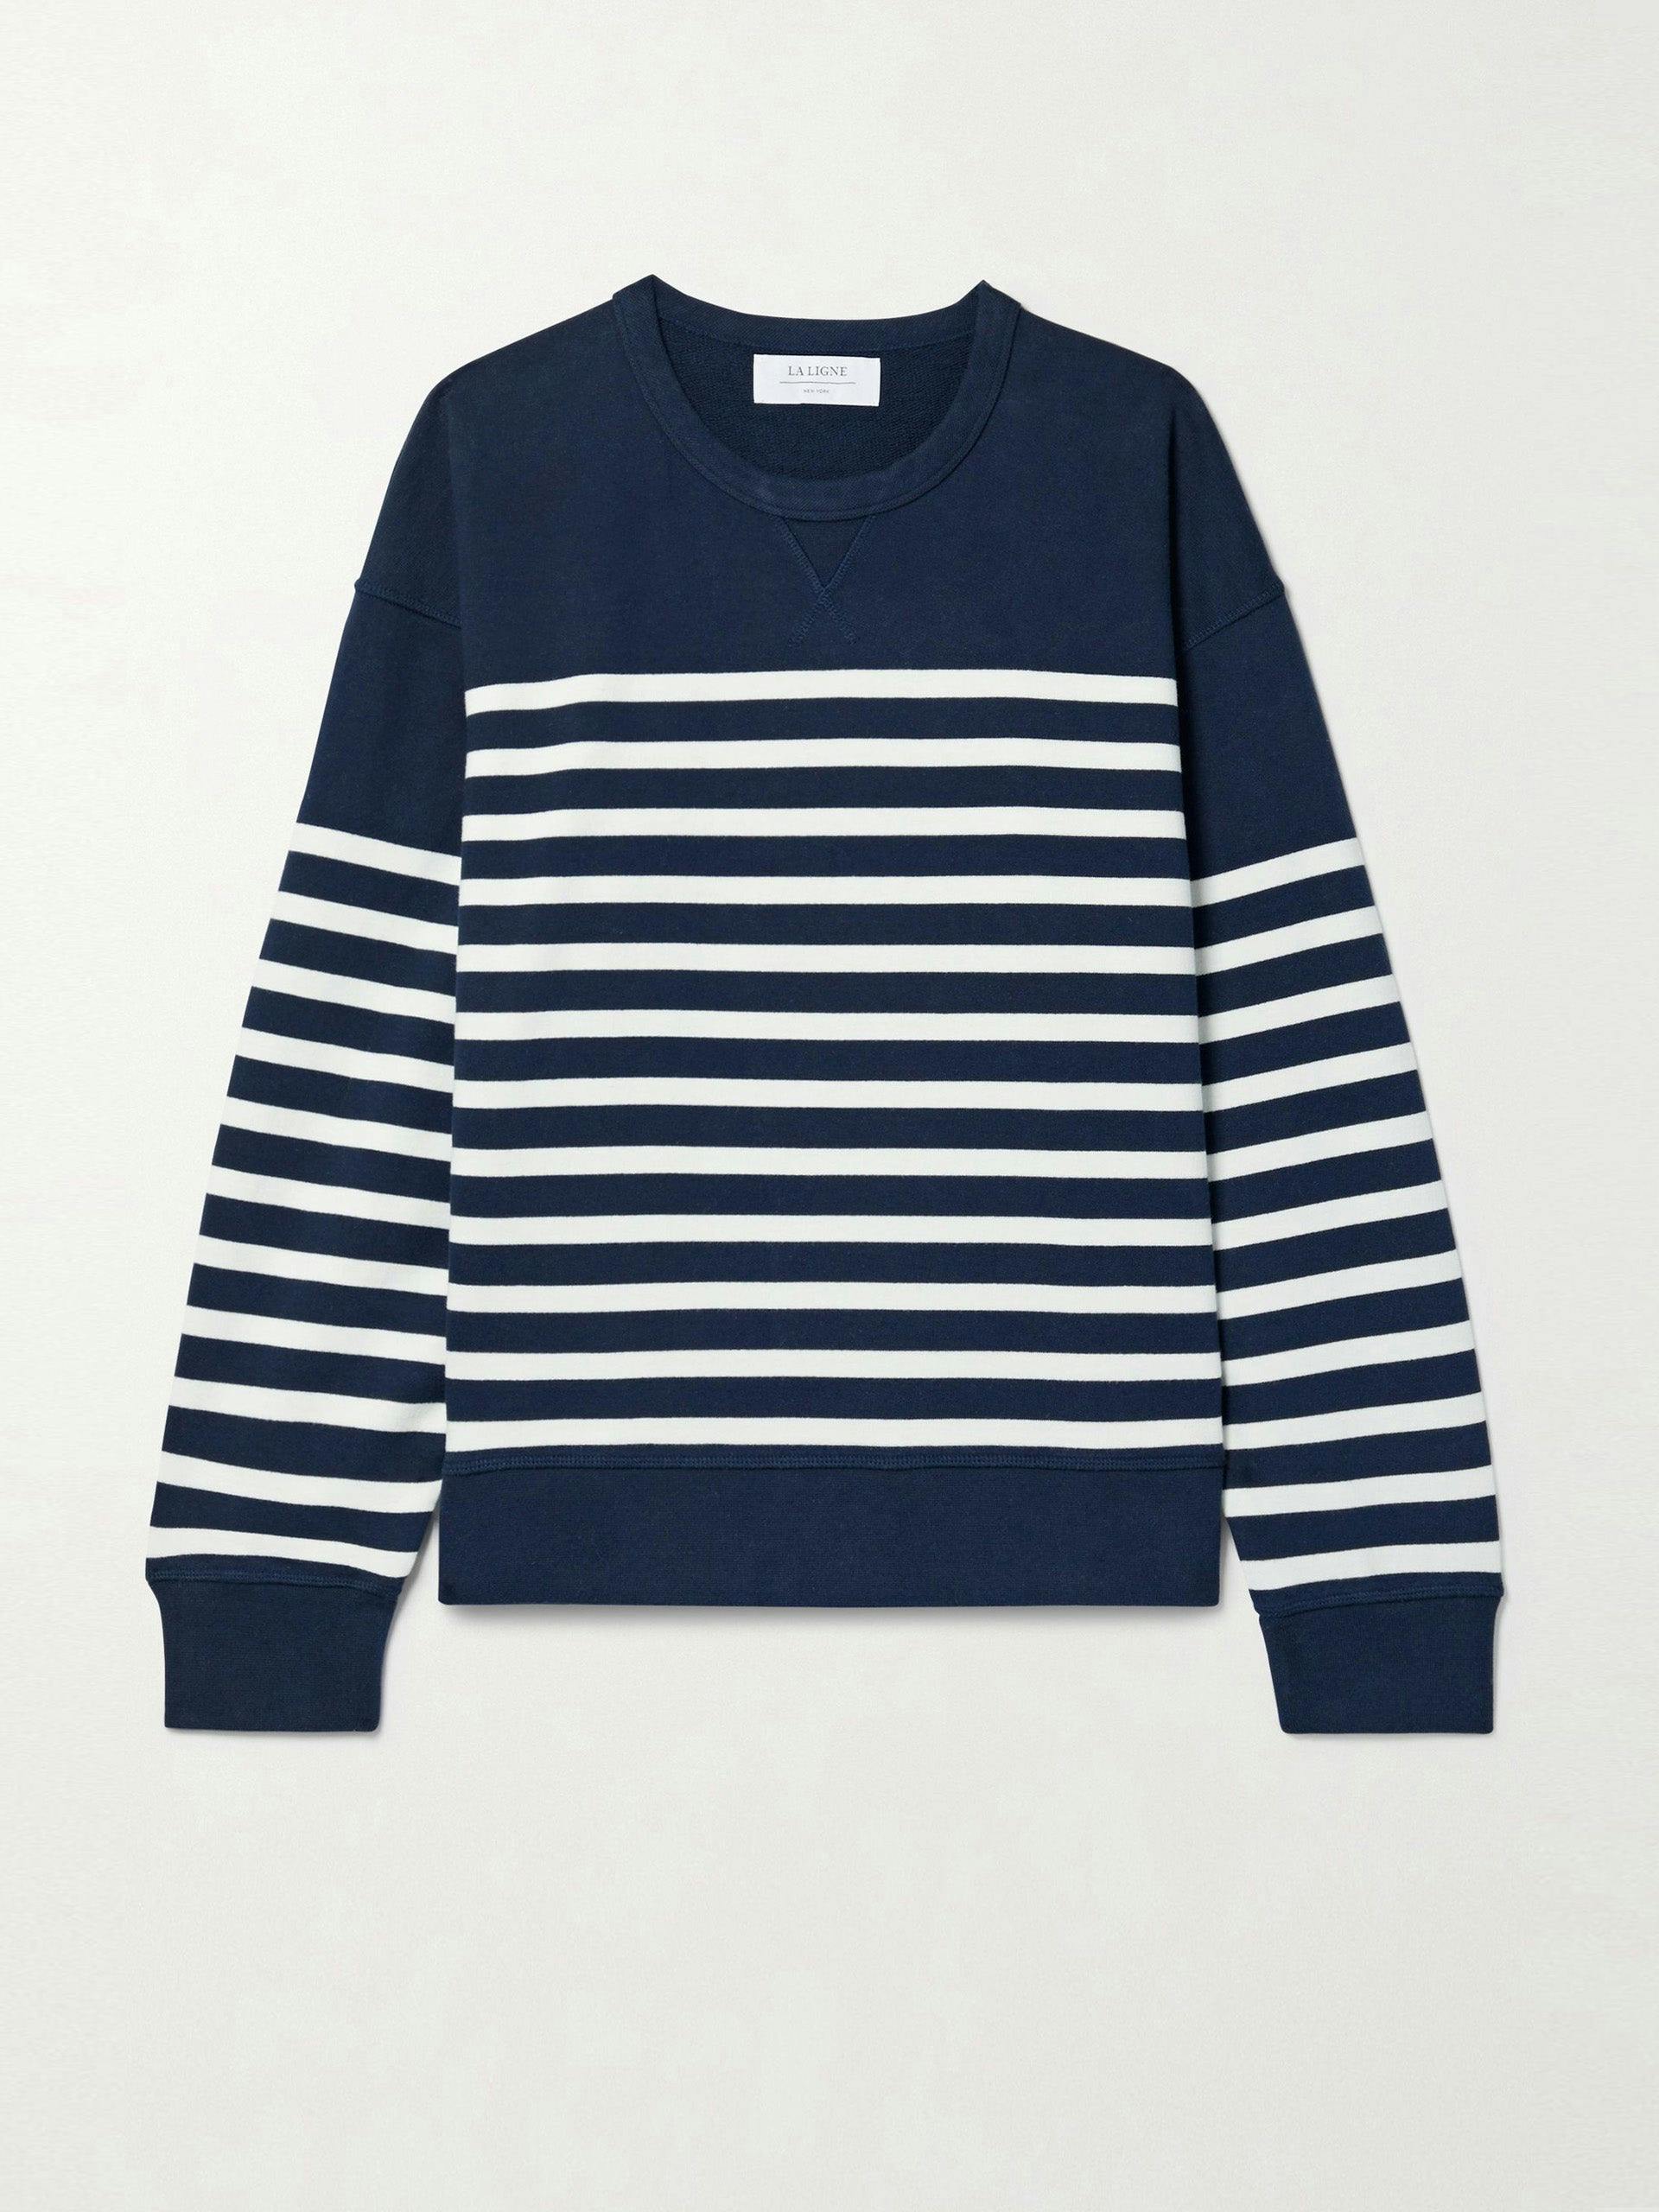 Blue striped cotton jumper